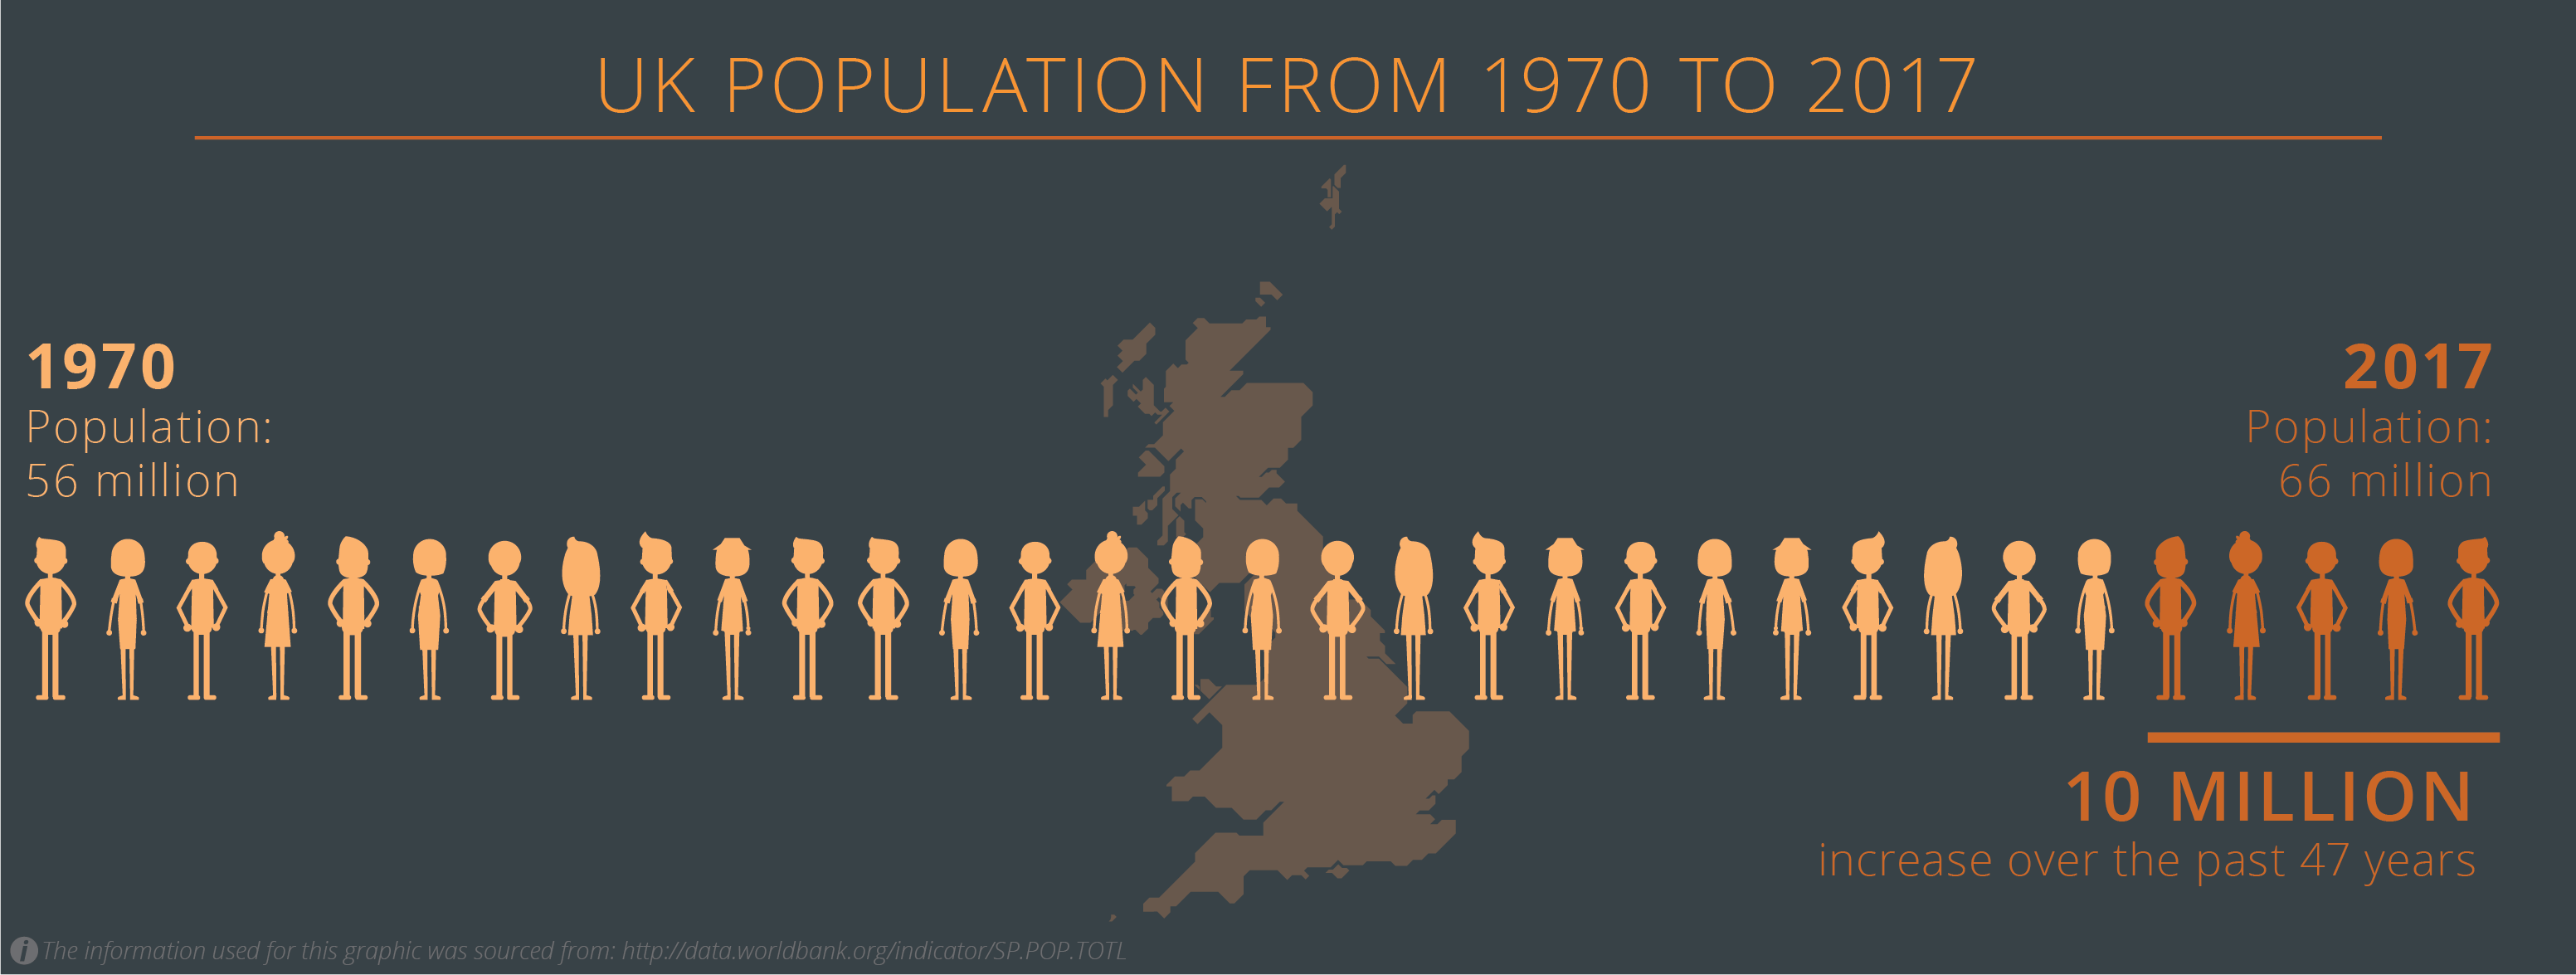 UK Population 1970-2017